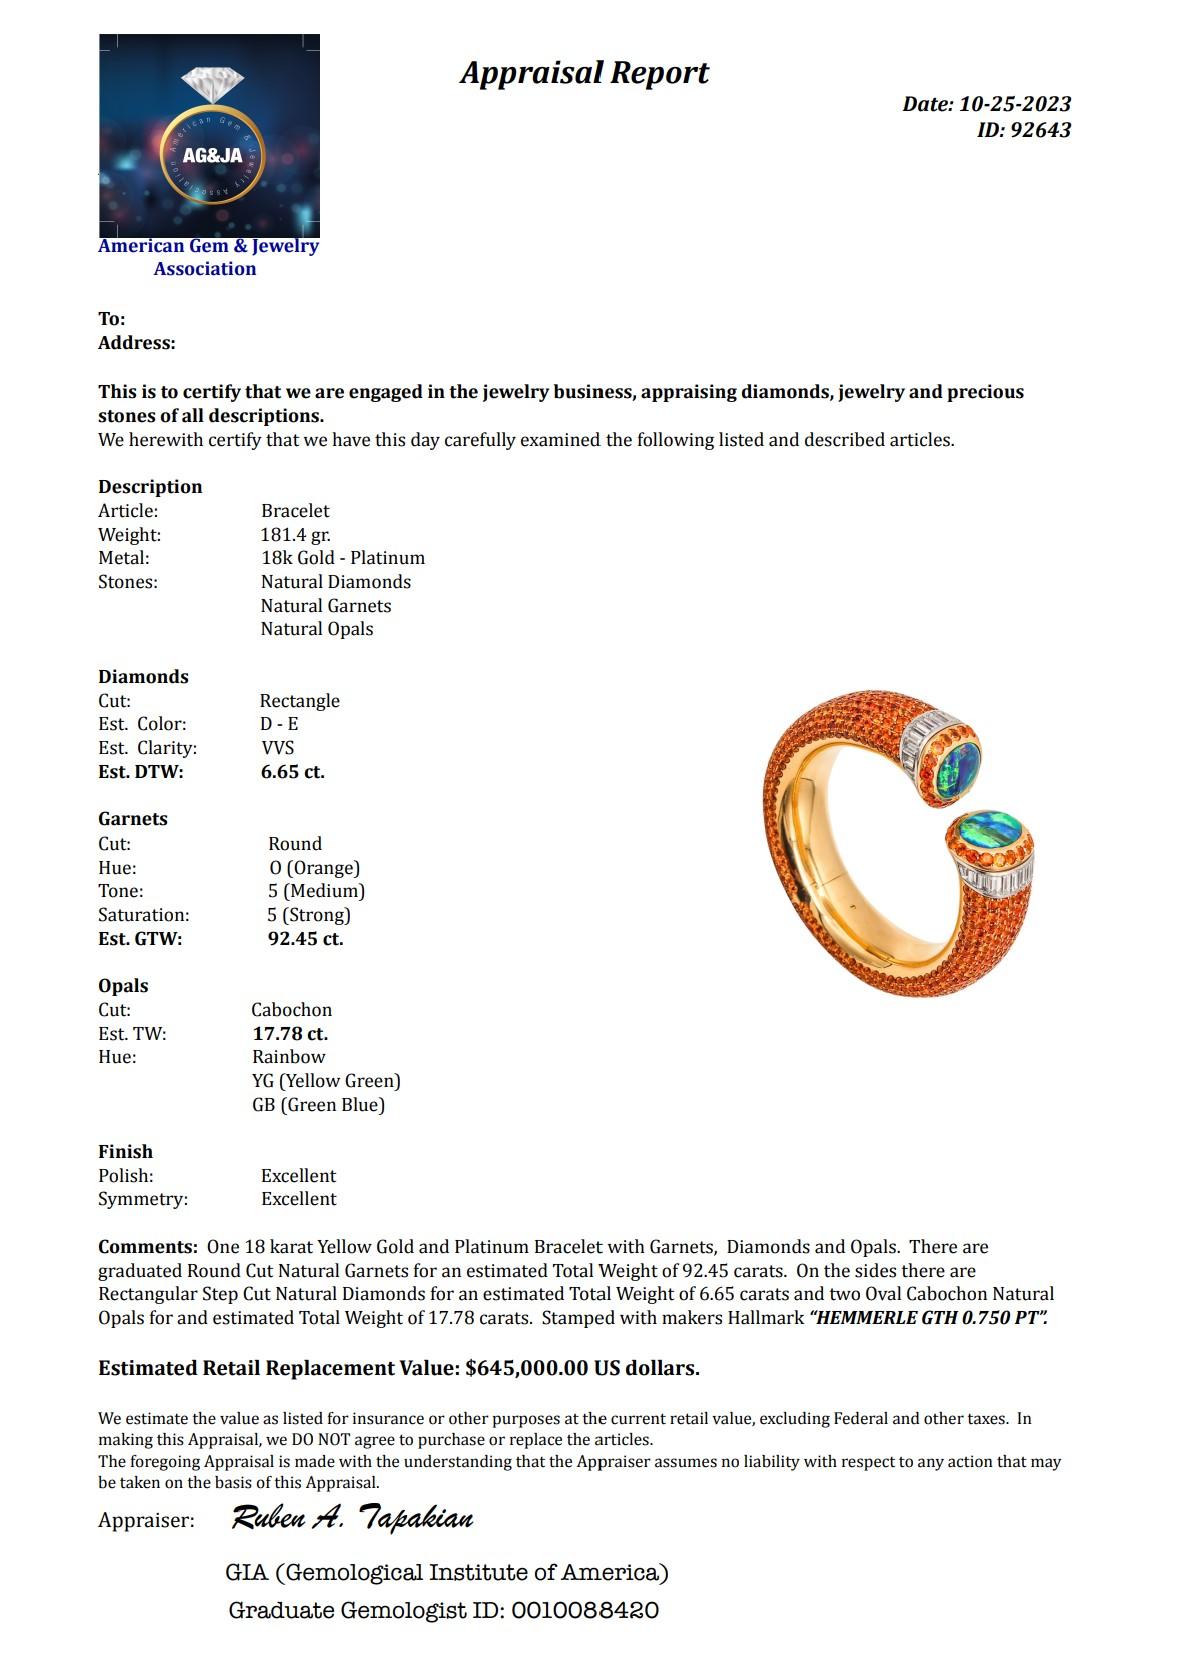 Hemmerle Mandarin Garnets Cuff Bracelet In 18Kt Gold Platinum Diamonds And Opals For Sale 5